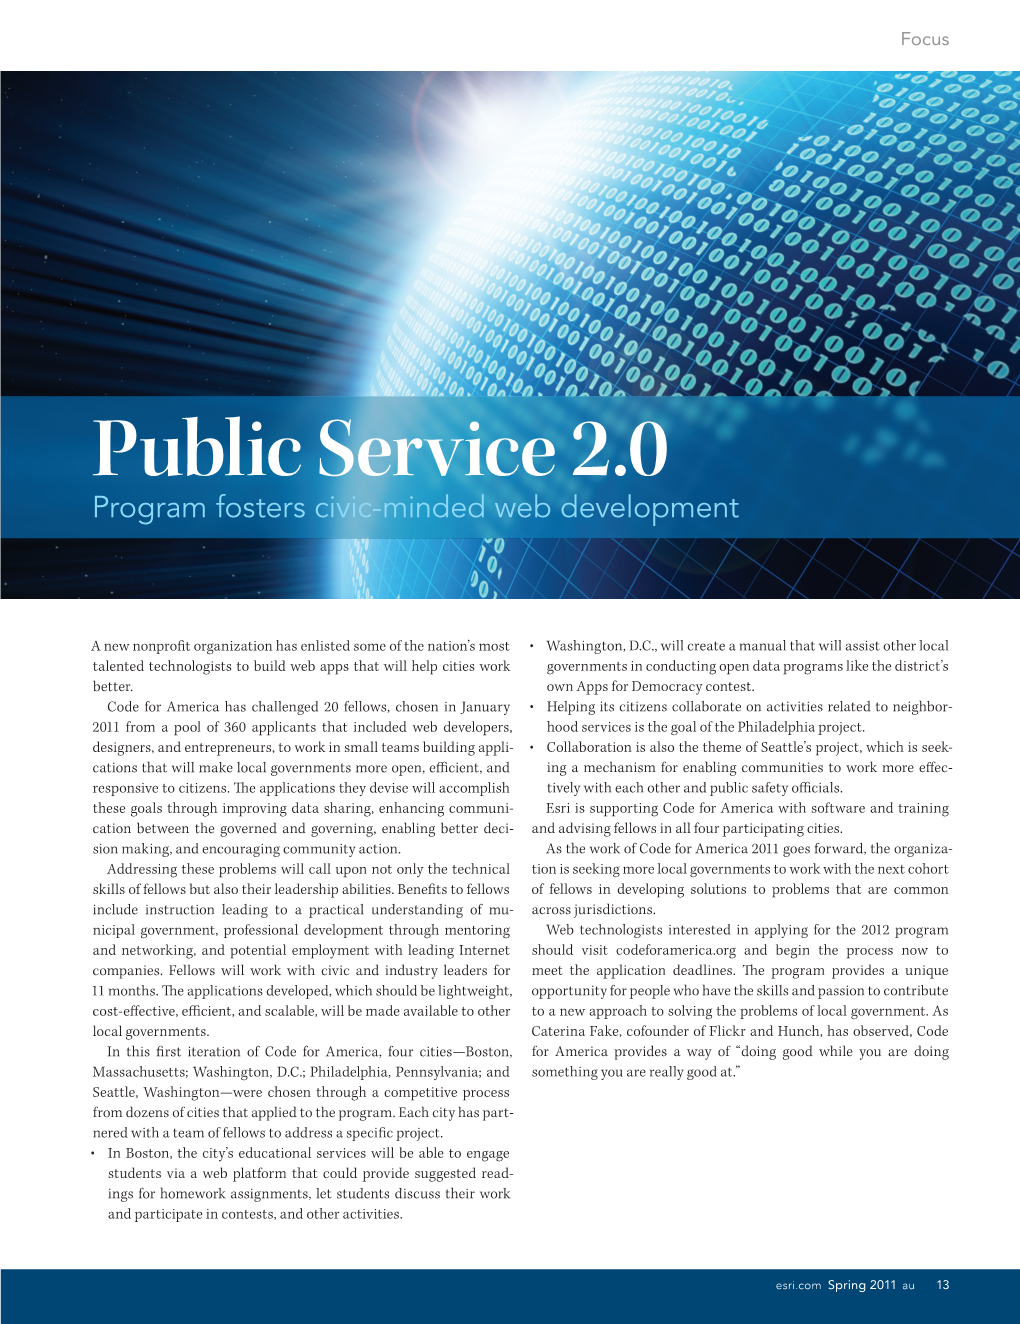 Public Service 2.0 Program Fosters Civic-Minded Web Development